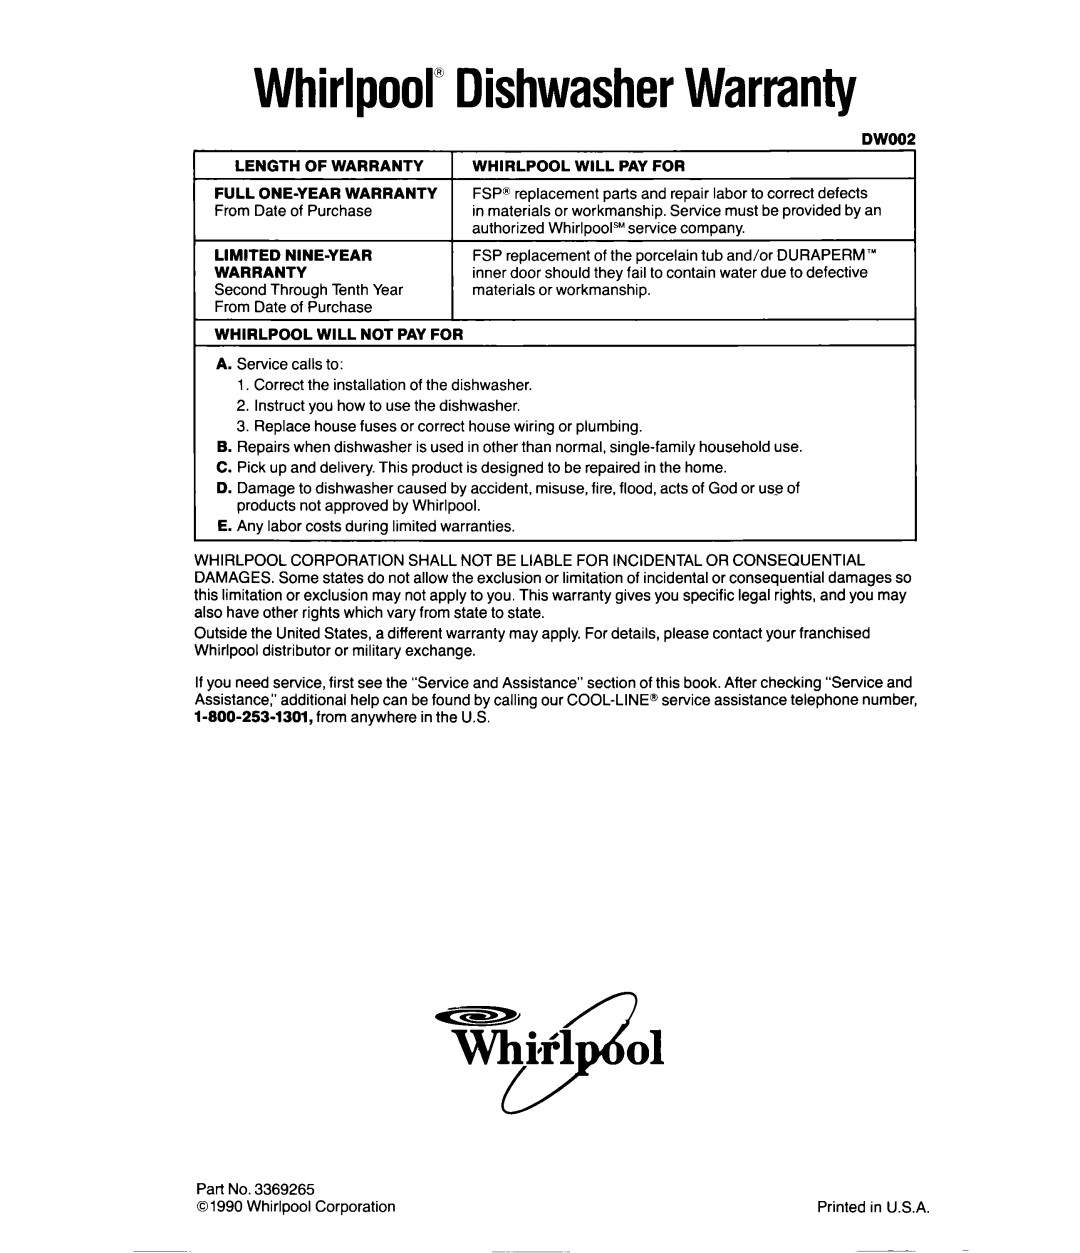 Whirlpool DP8350XV manual Whirlpool”DishwasherWarranty 